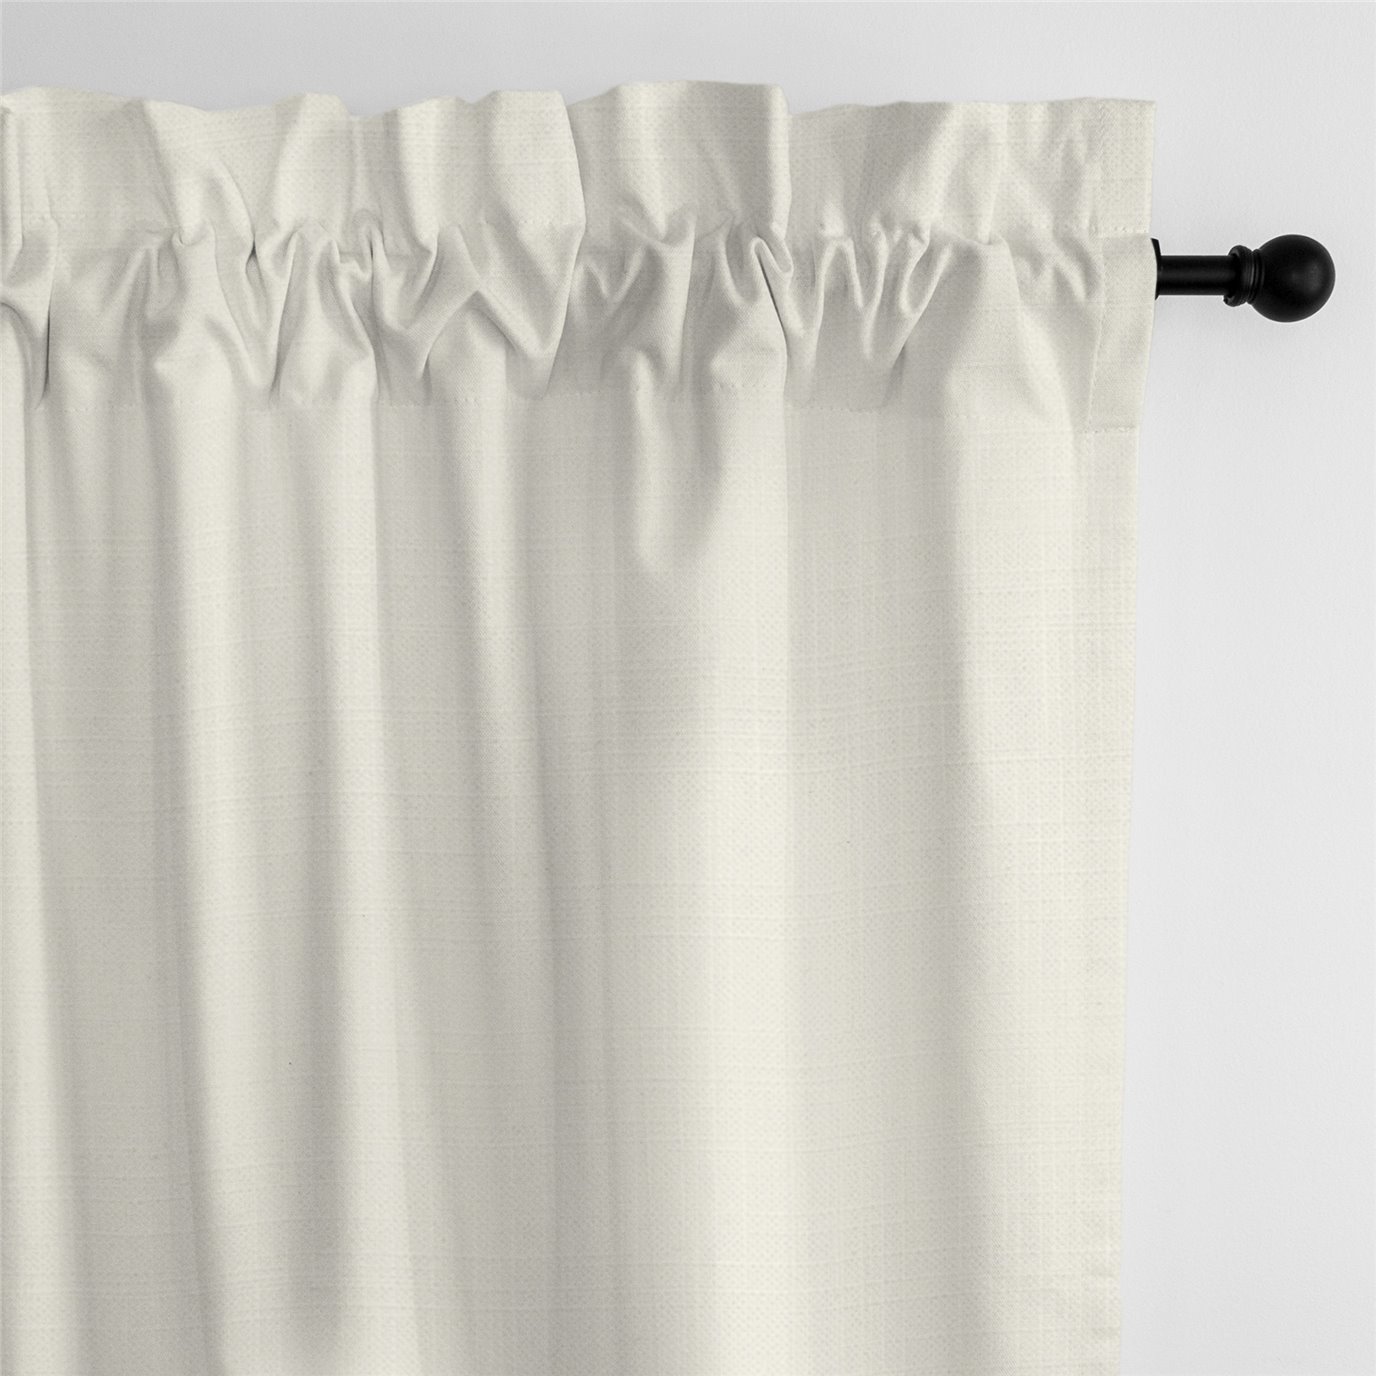 Ancebridge Vanilla Pole Top Drapery Panel - Pair - Size 50"x120"